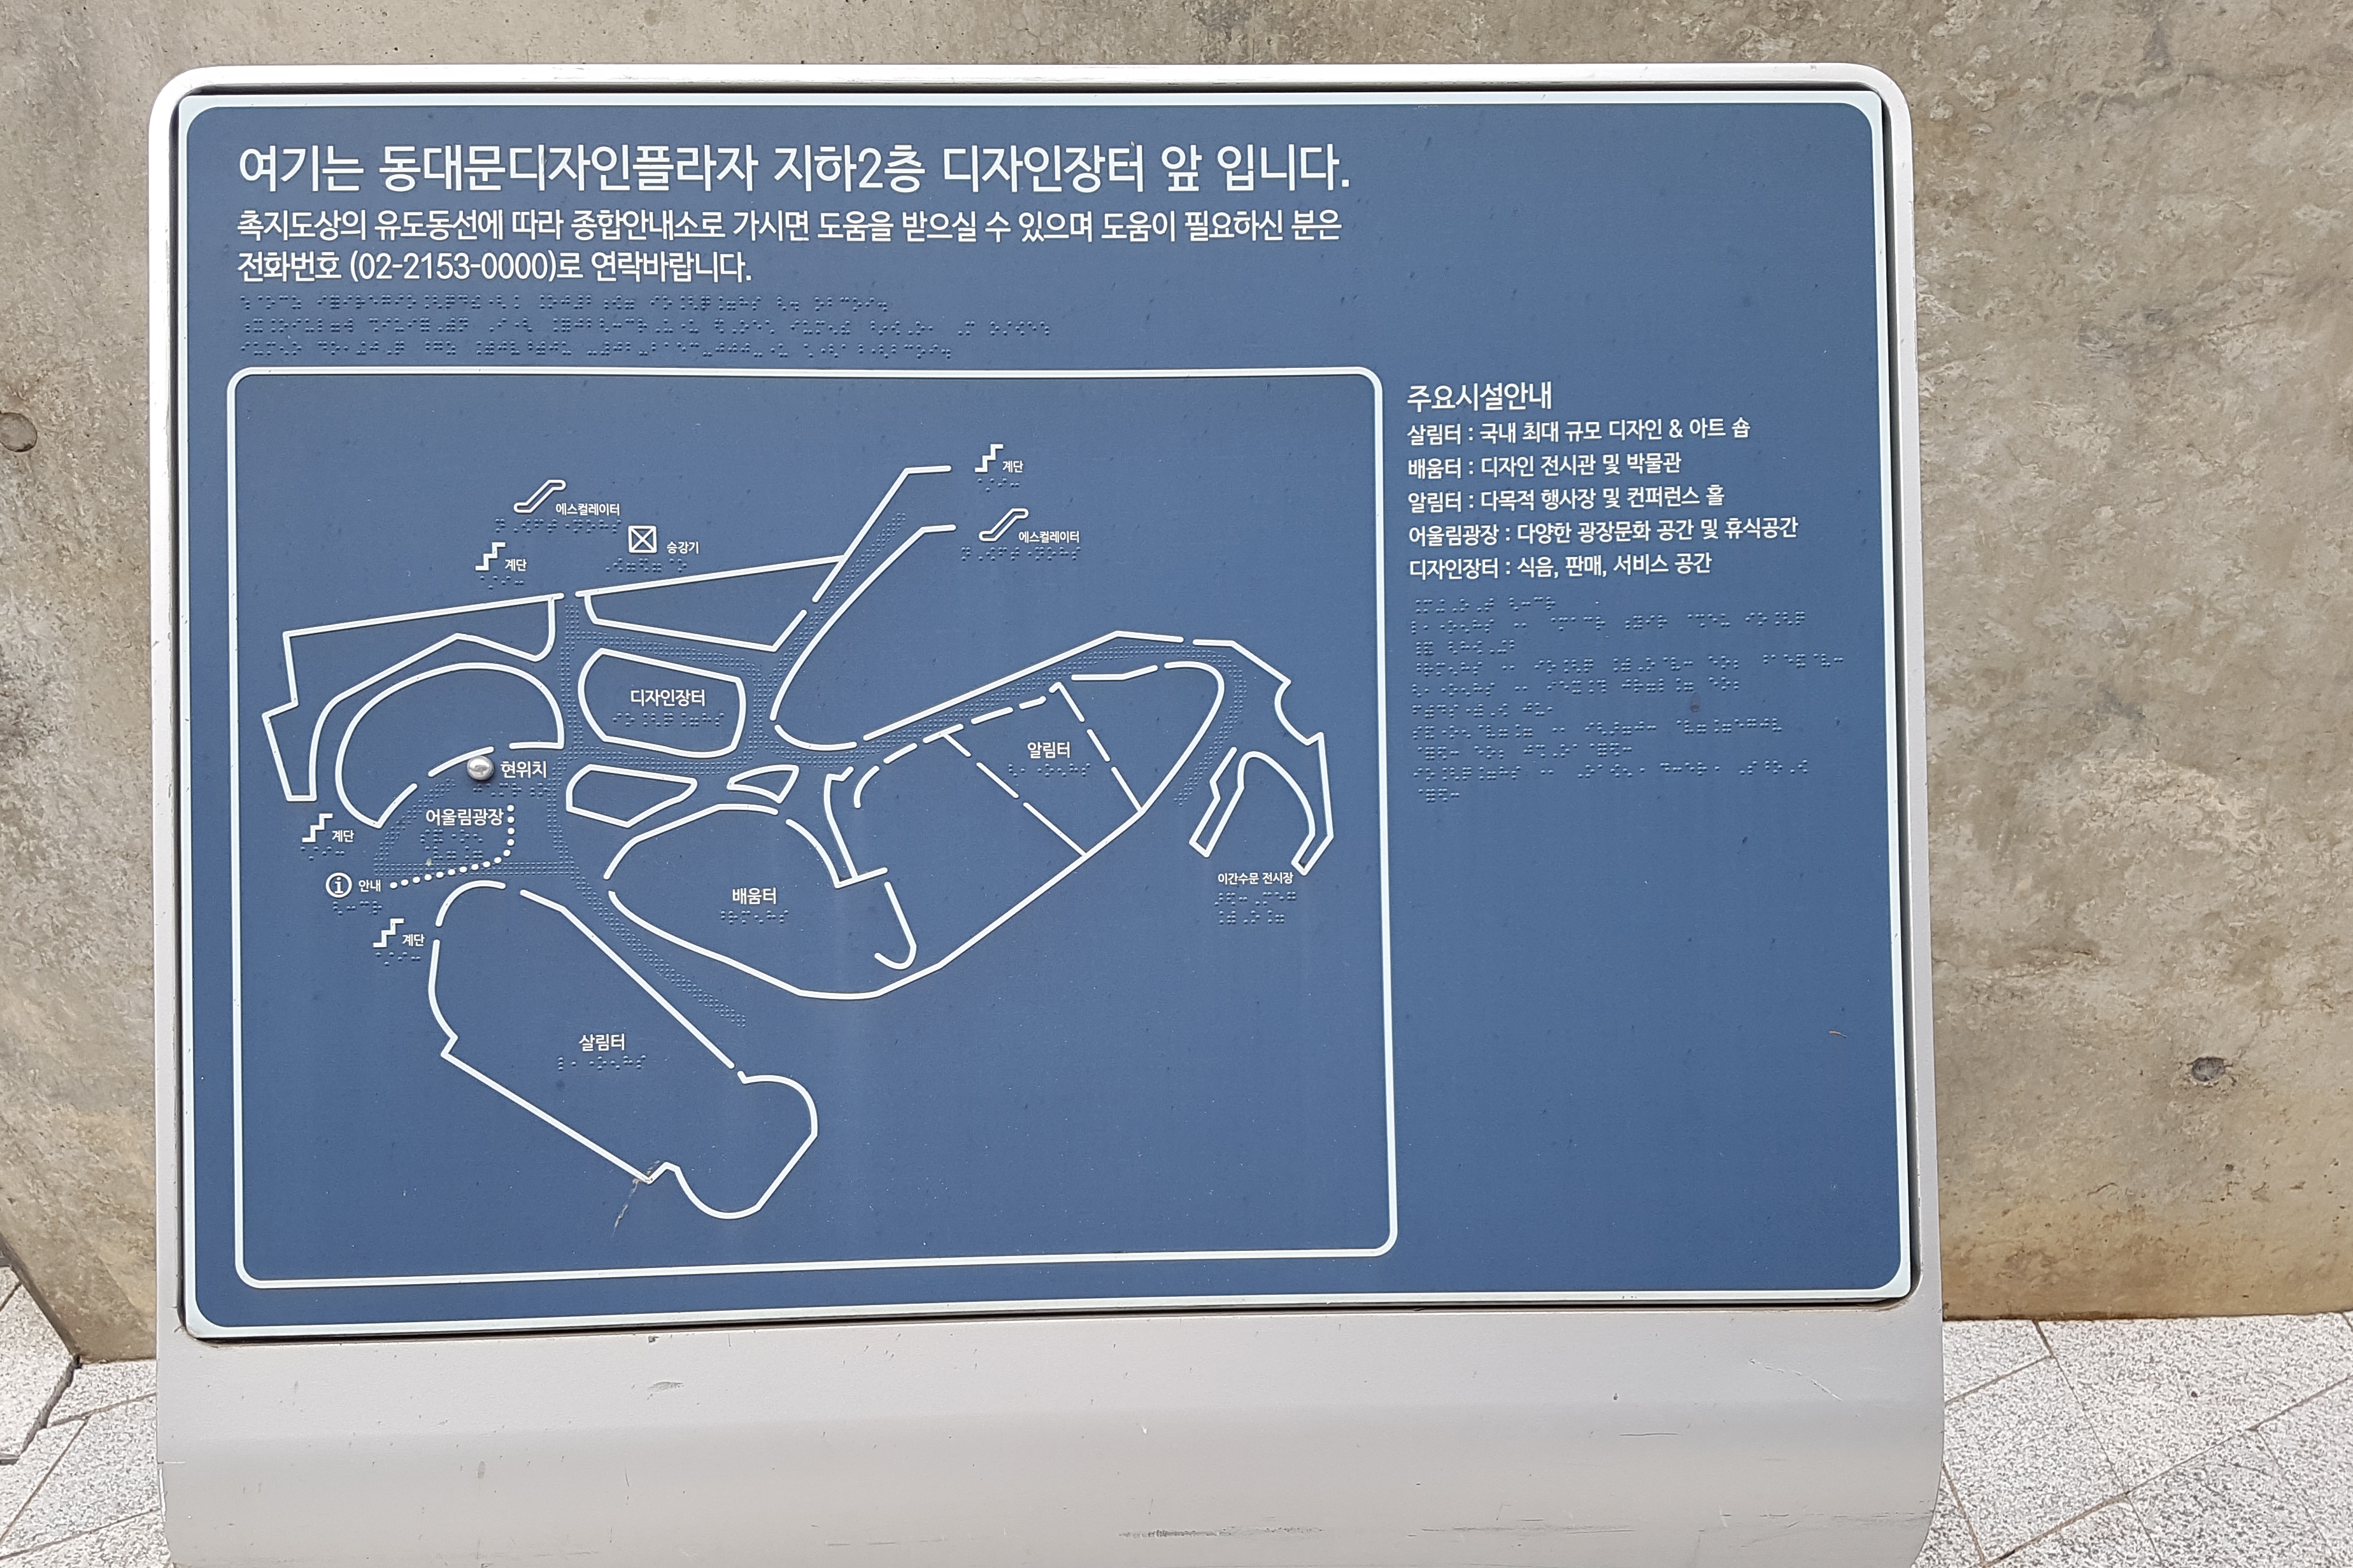 Guide map and information desk0 : Korean braille description board in Dongdaemun Design Plaza 2
